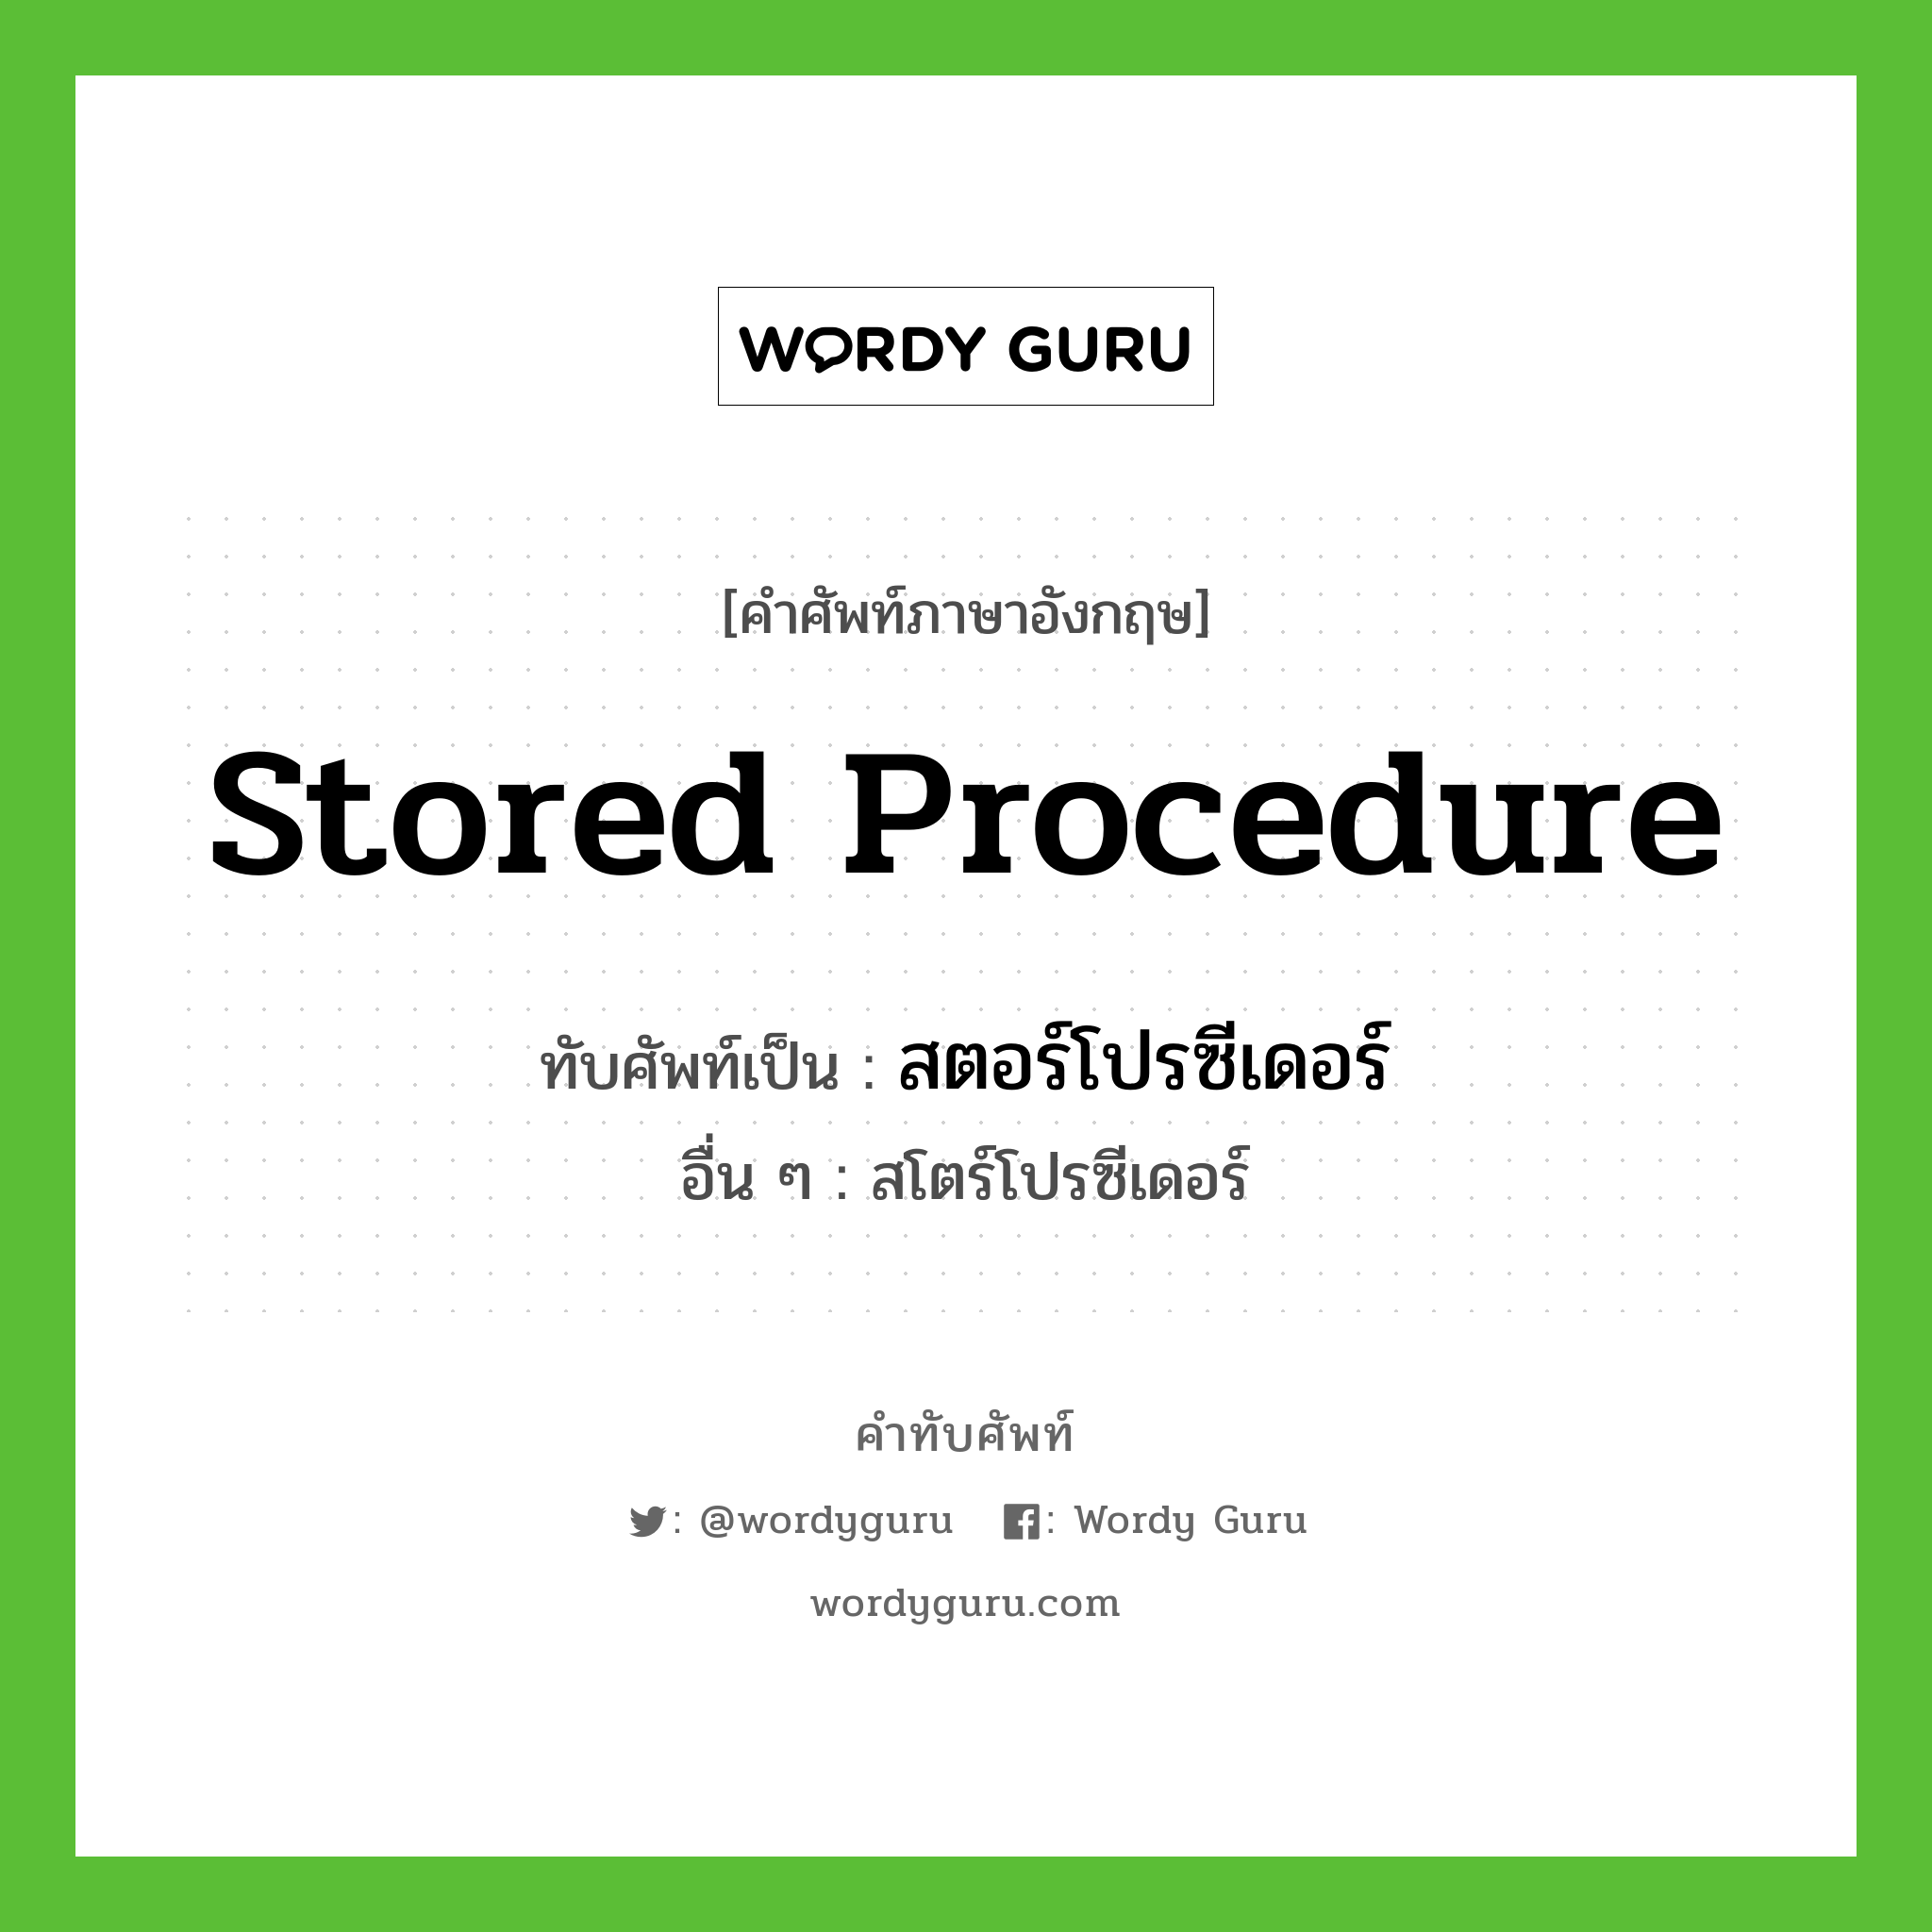 stored procedure เขียนเป็นคำไทยว่าอะไร?, คำศัพท์ภาษาอังกฤษ stored procedure ทับศัพท์เป็น สตอร์โปรซีเดอร์ อื่น ๆ สโตร์โปรซีเดอร์